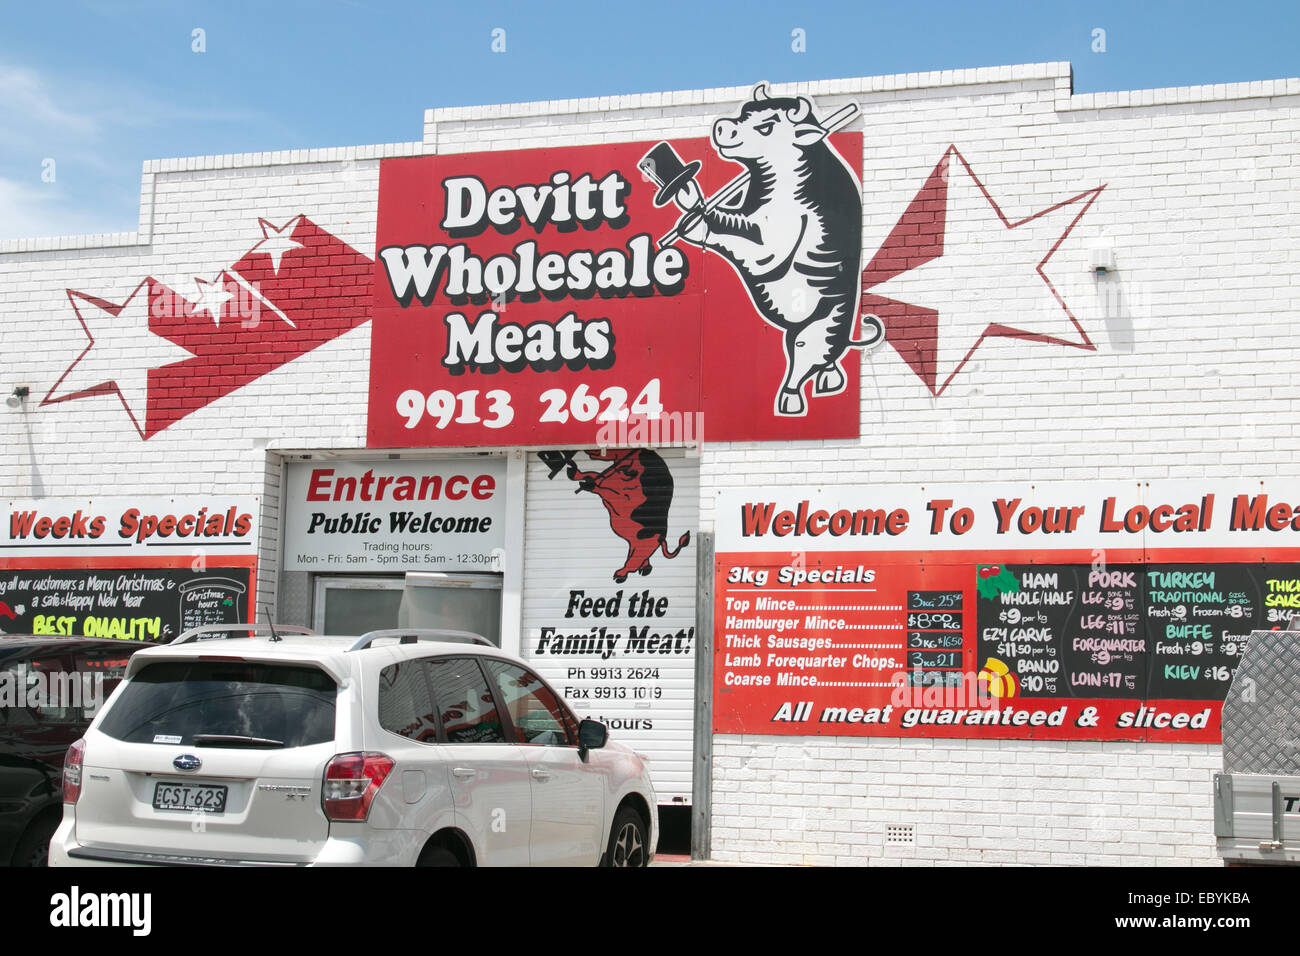 Devitt australian meat wholesaler in narrabeen,sydney,australia Stock Photo